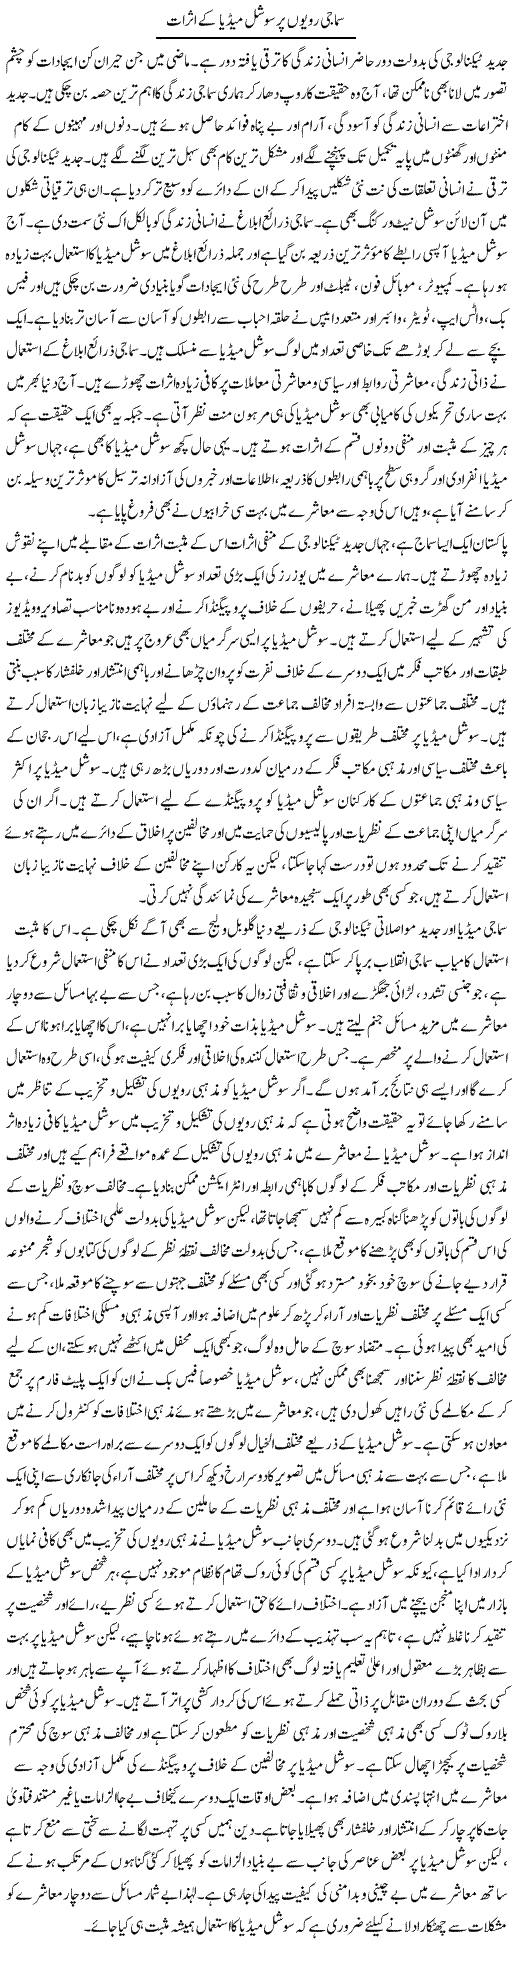 Samaji Ruswaiyon Per Social Media Ke Asraat | Abid Mehmood Azaam | Daily Urdu Columns